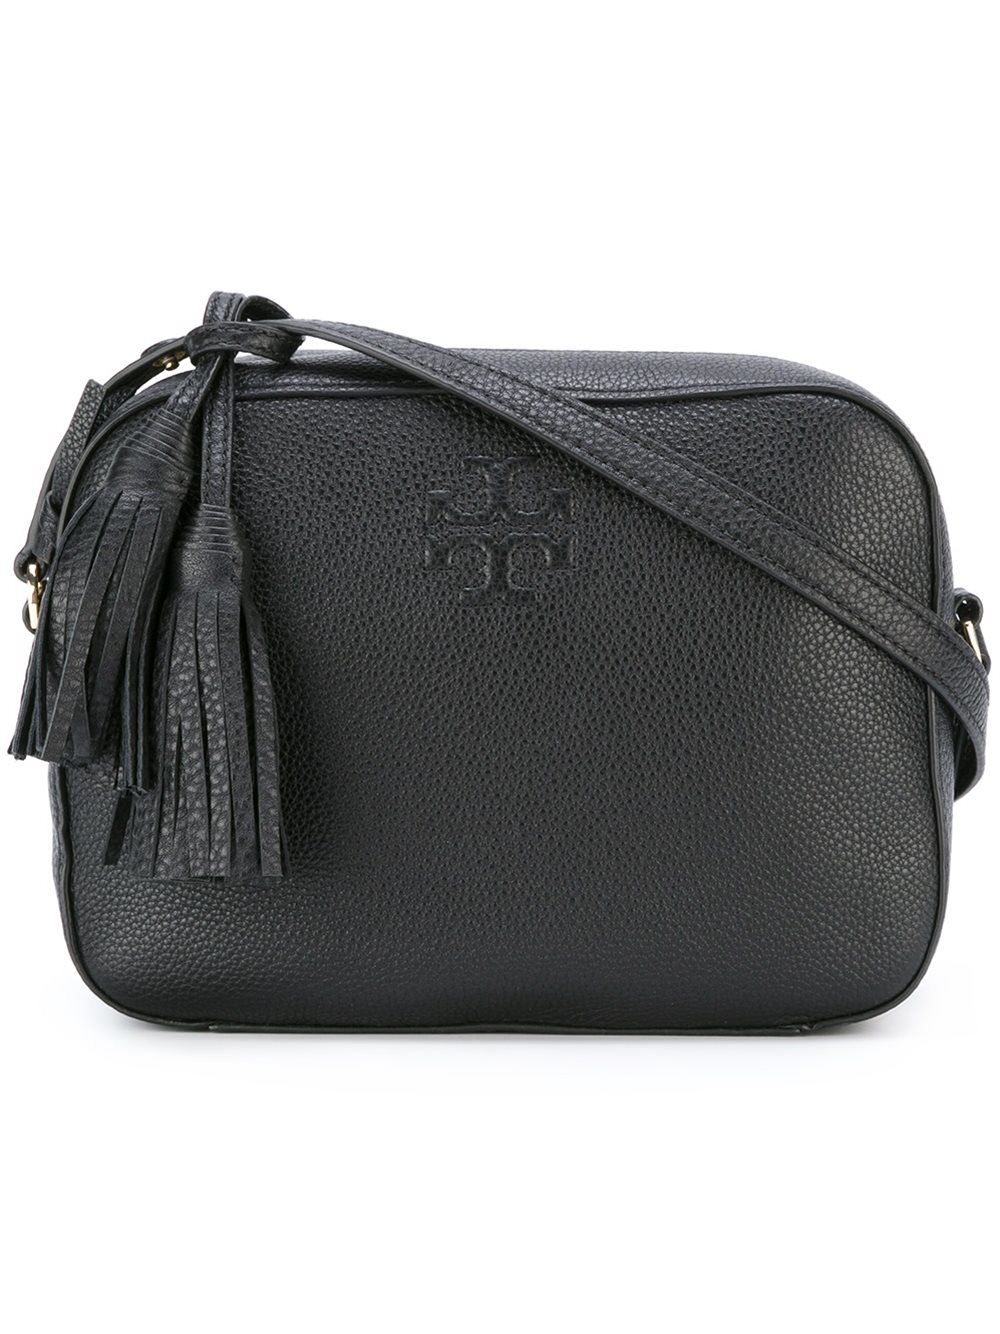 Lyst - Tory Burch Tassel Detail Crossbody Bag in Black